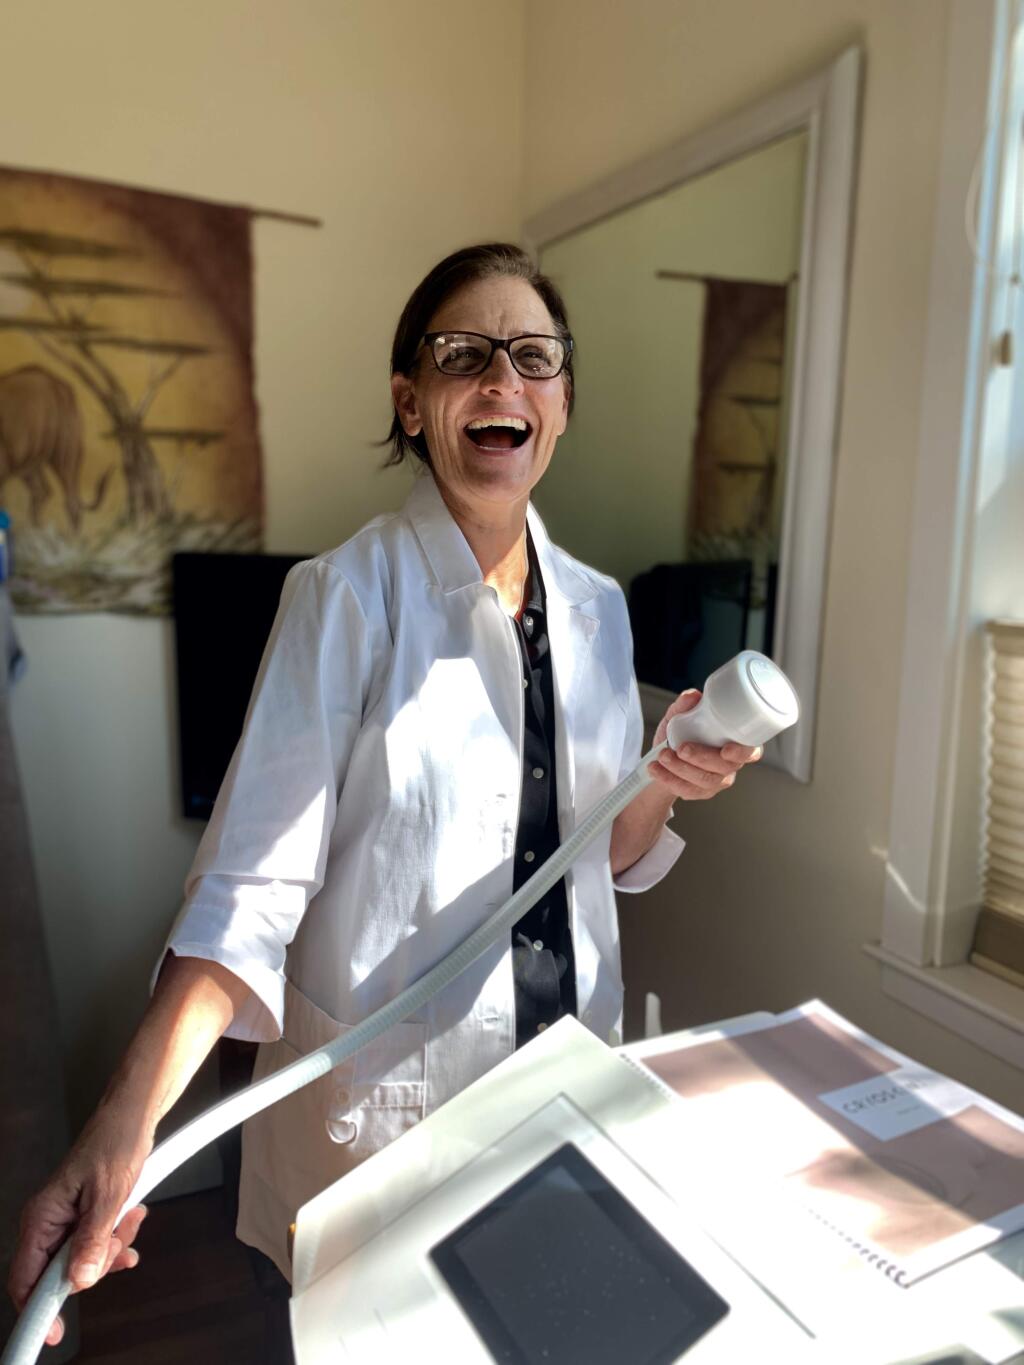 Registered nurse Leslie Mancini has brought cryo skin therapy to Sonoma.